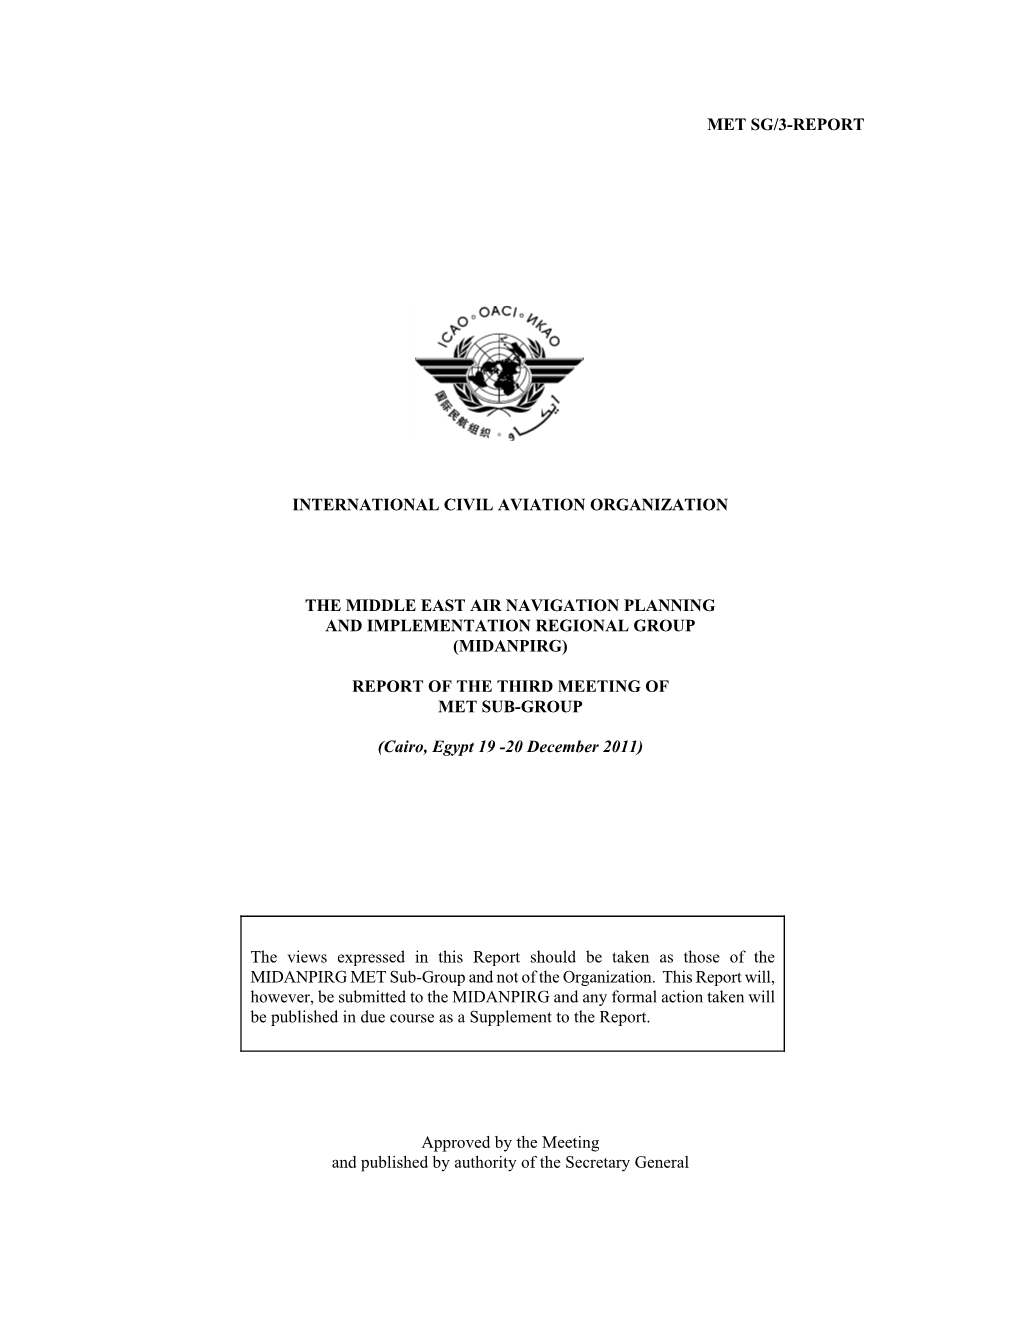 Met Sg/3-Report International Civil Aviation Organization